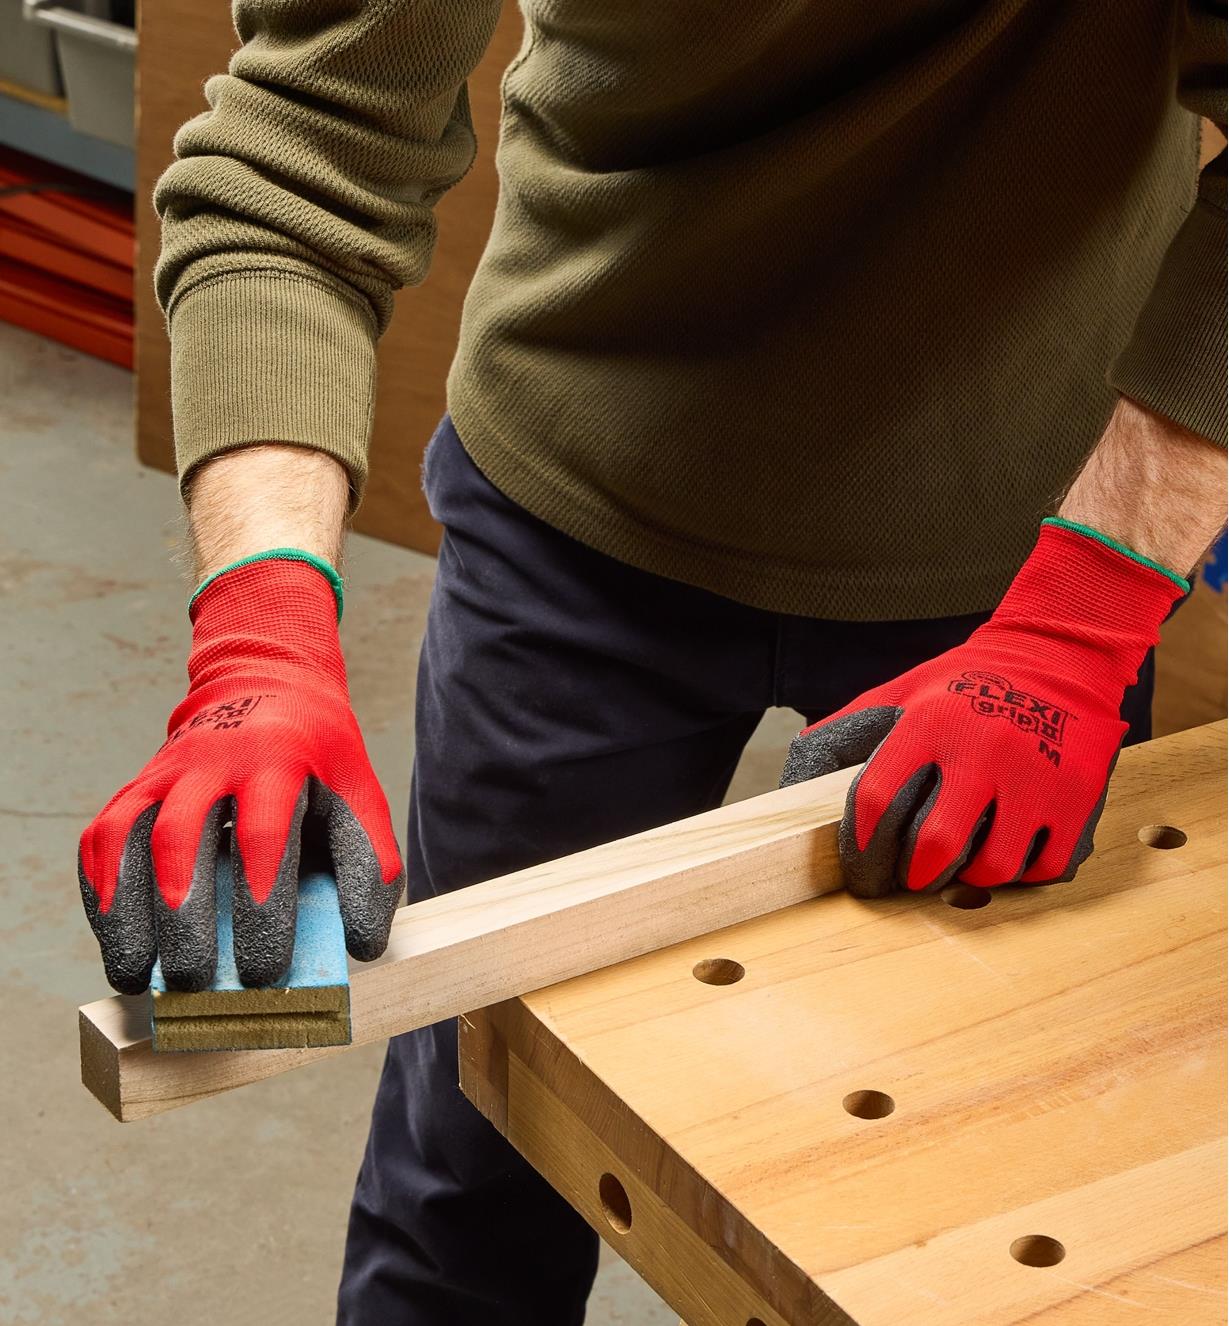 A man wears Flex Grip gloves while sanding a piece of wooden stock